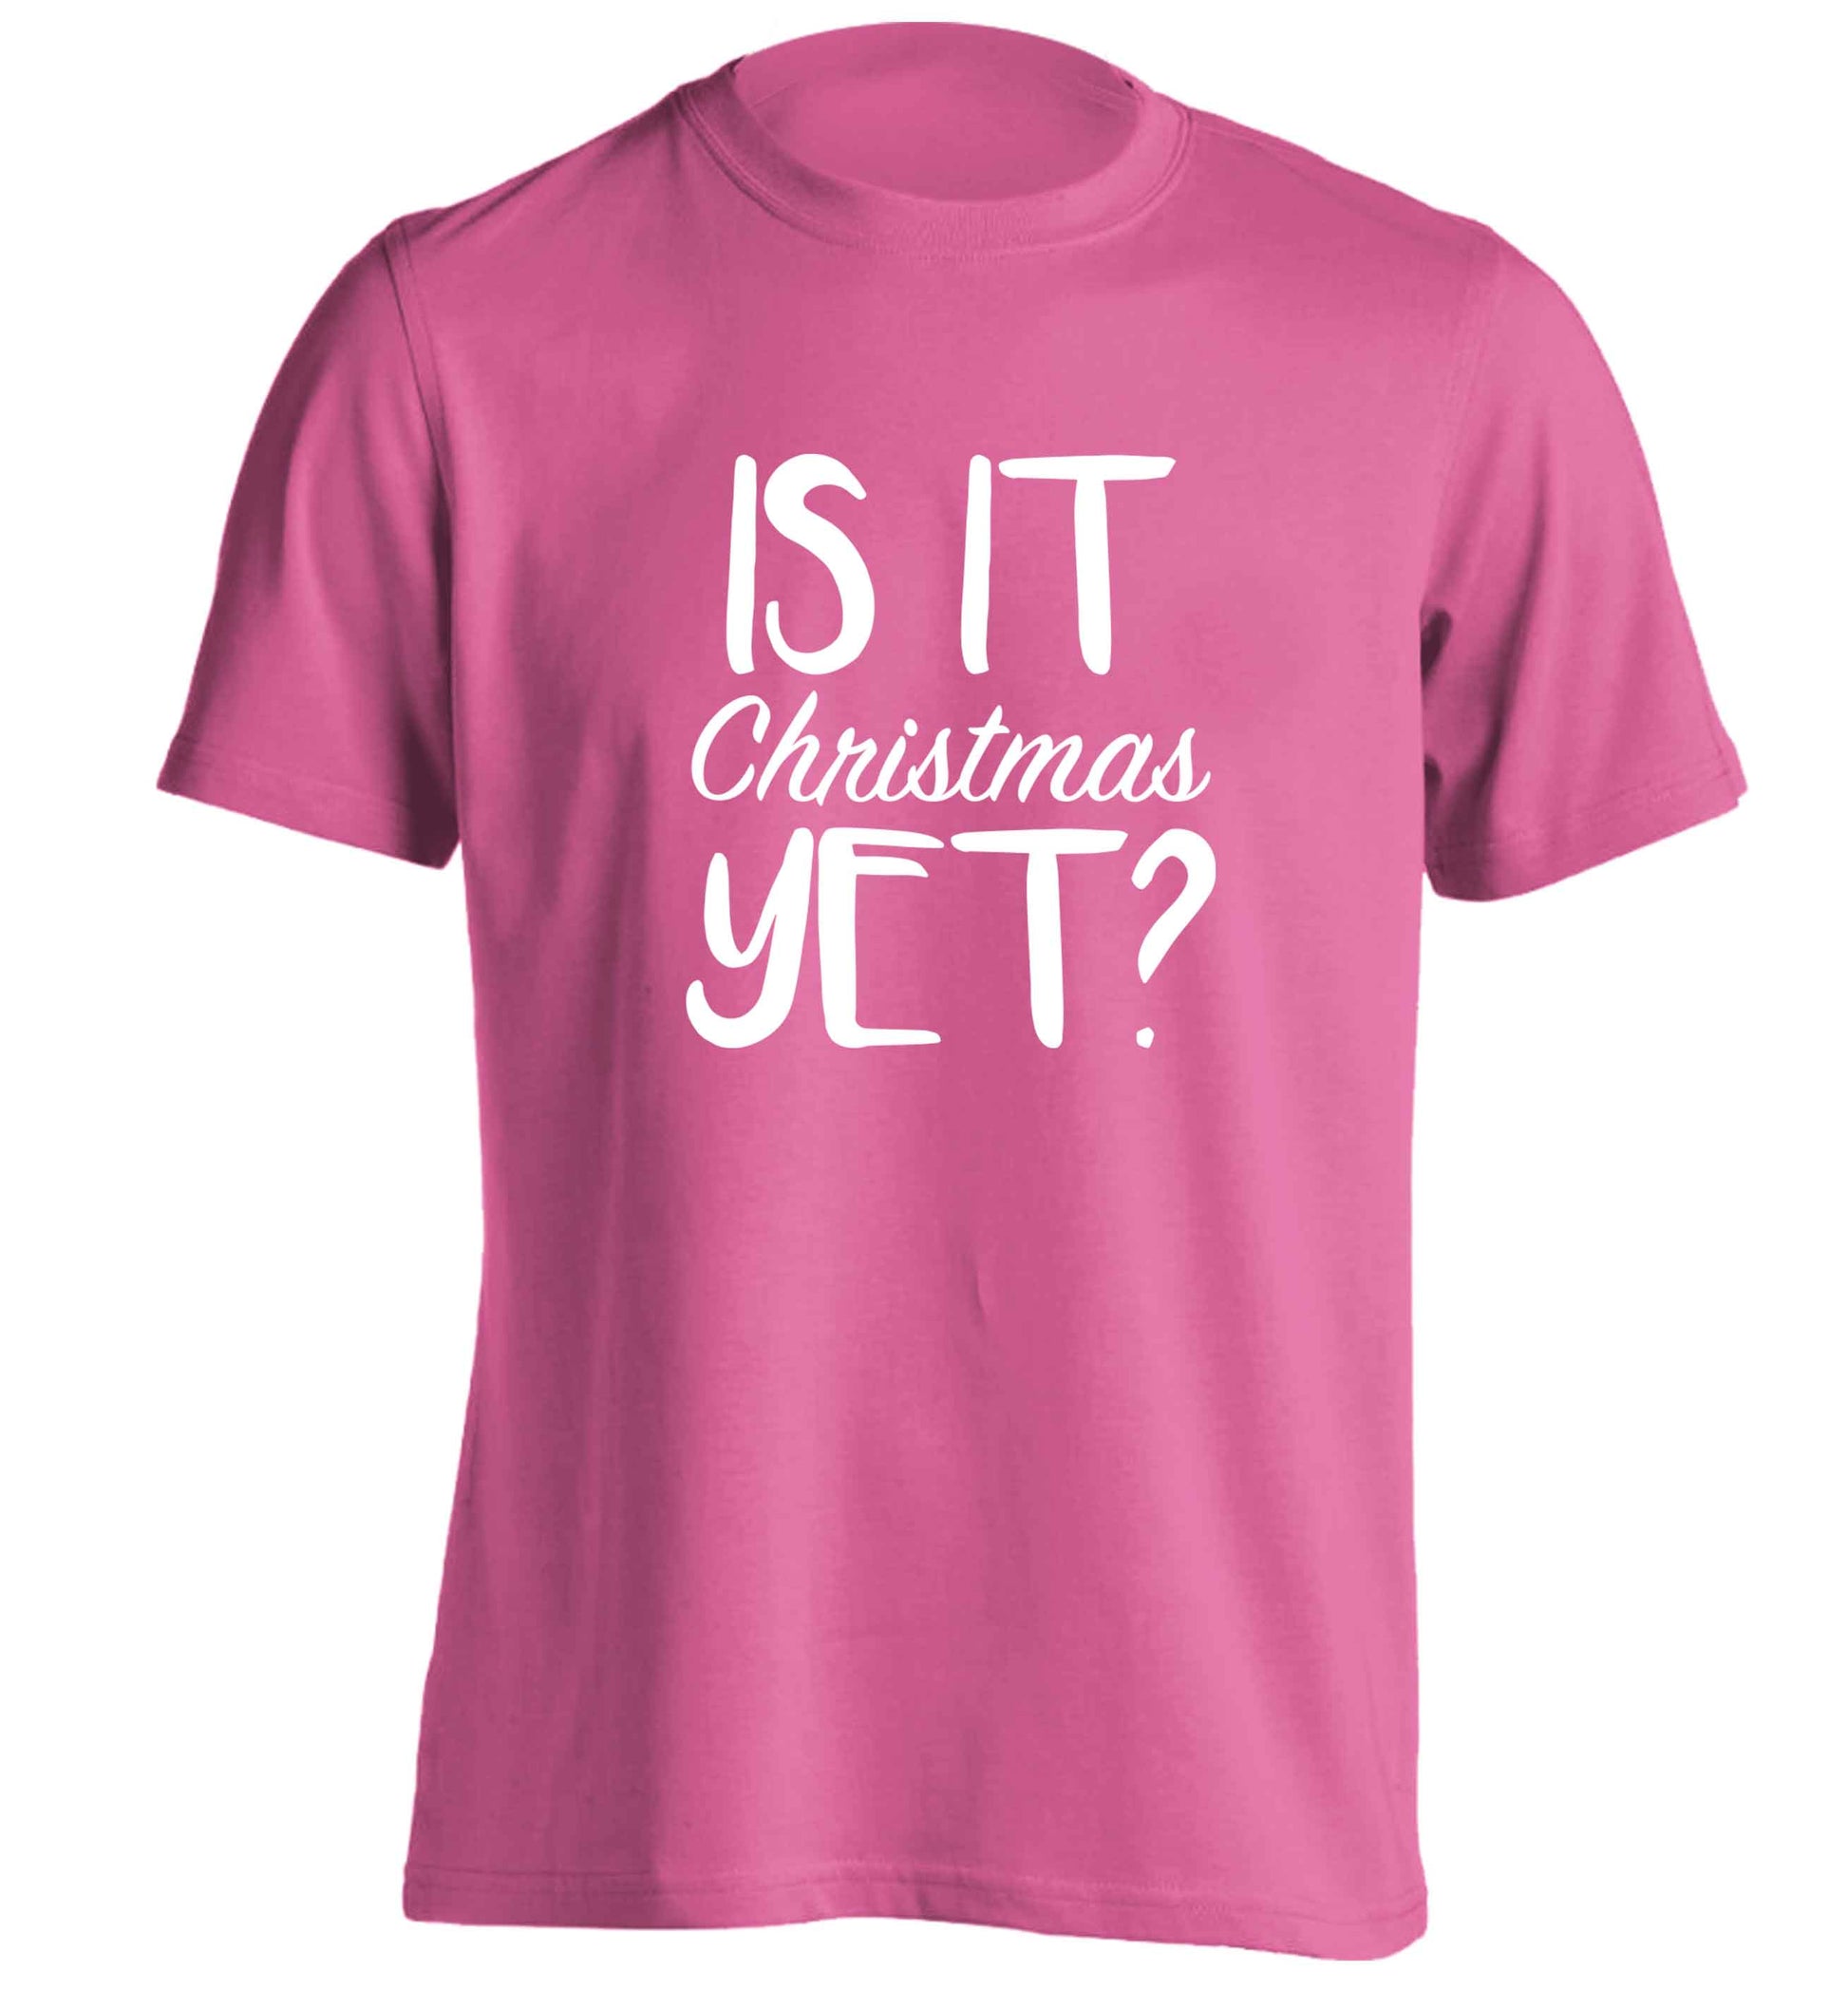 Is it Christmas yet? adults unisex pink Tshirt 2XL